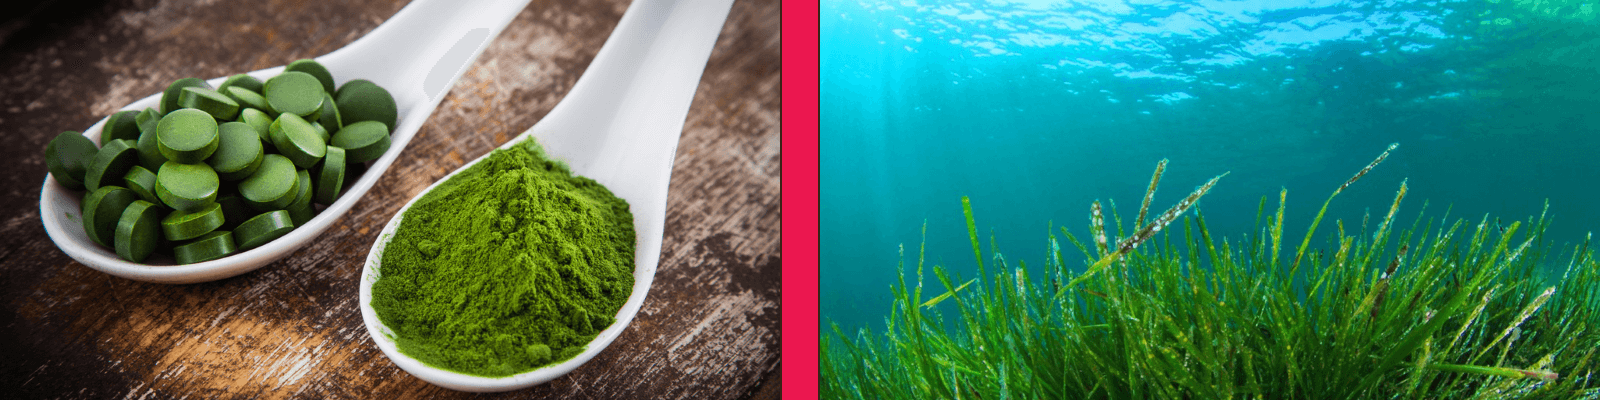 Difference between spirulina and chlorella